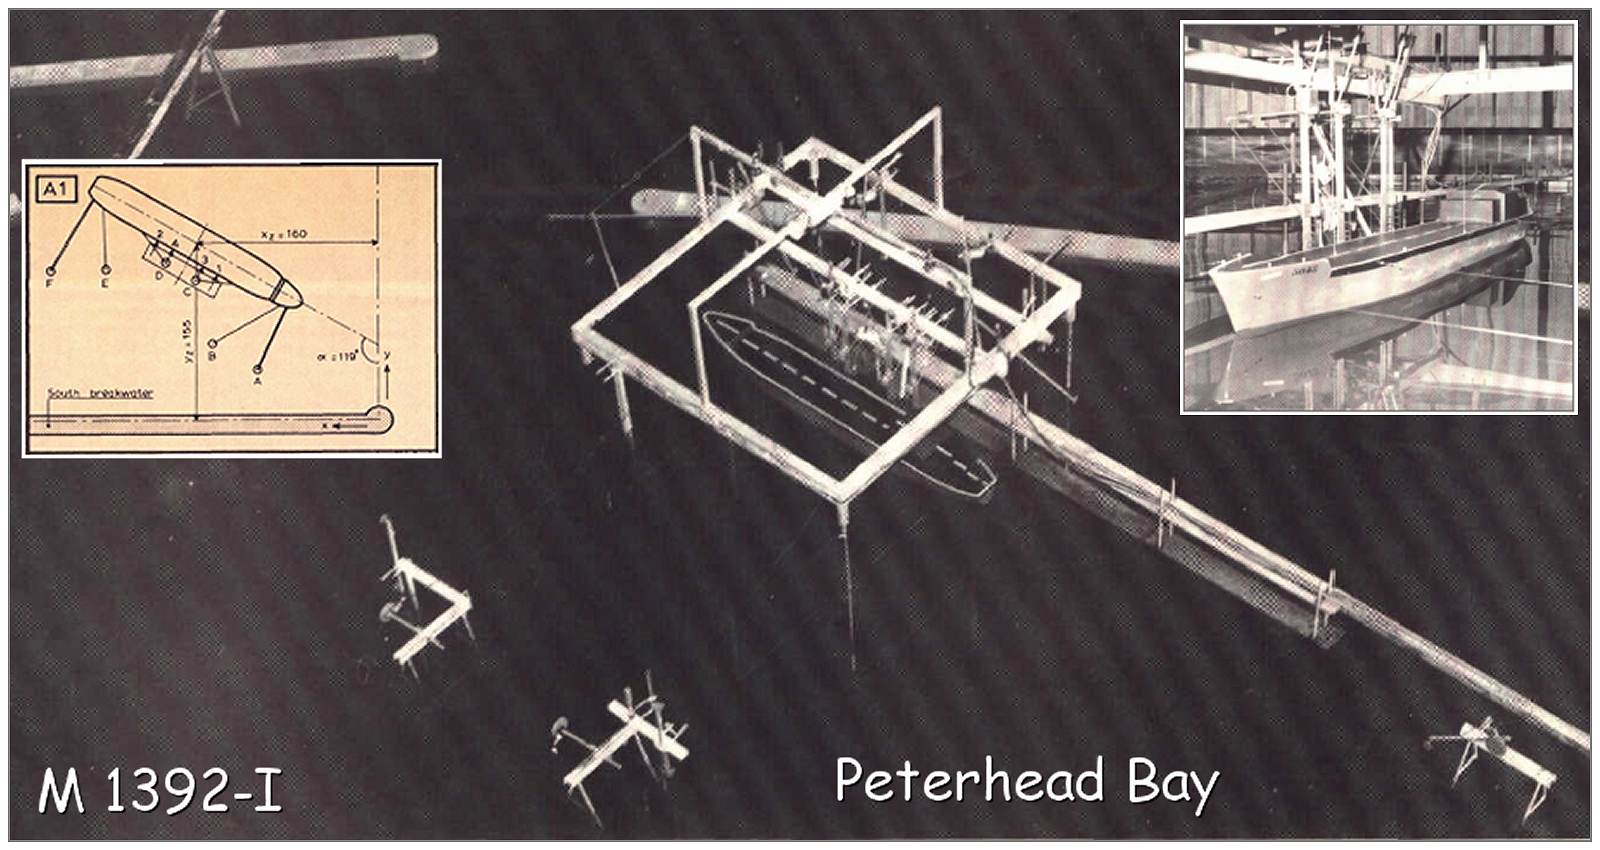 M 1392-I - Peterhead Bay - L.P.G. mooring